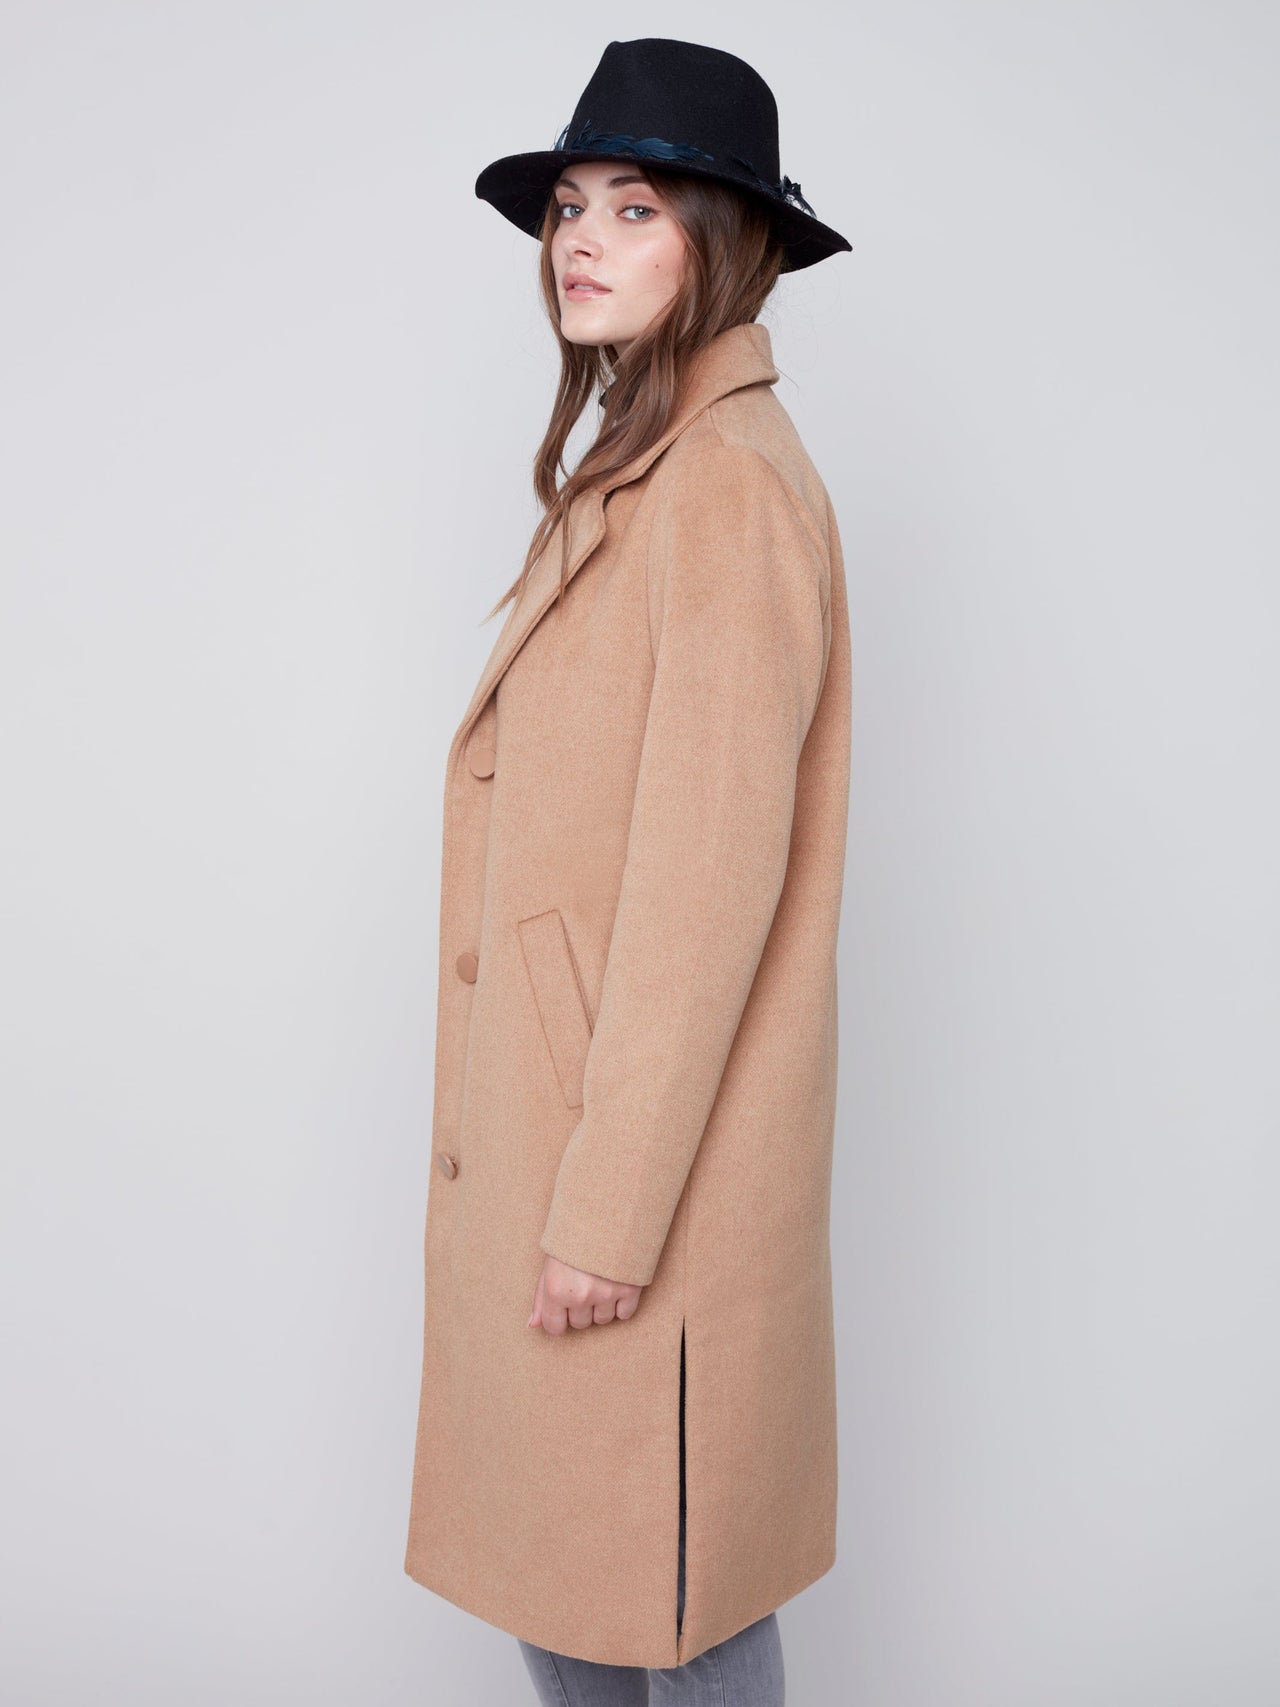 Long Coat Hepburn Style by Charlie B Charlie B Coat